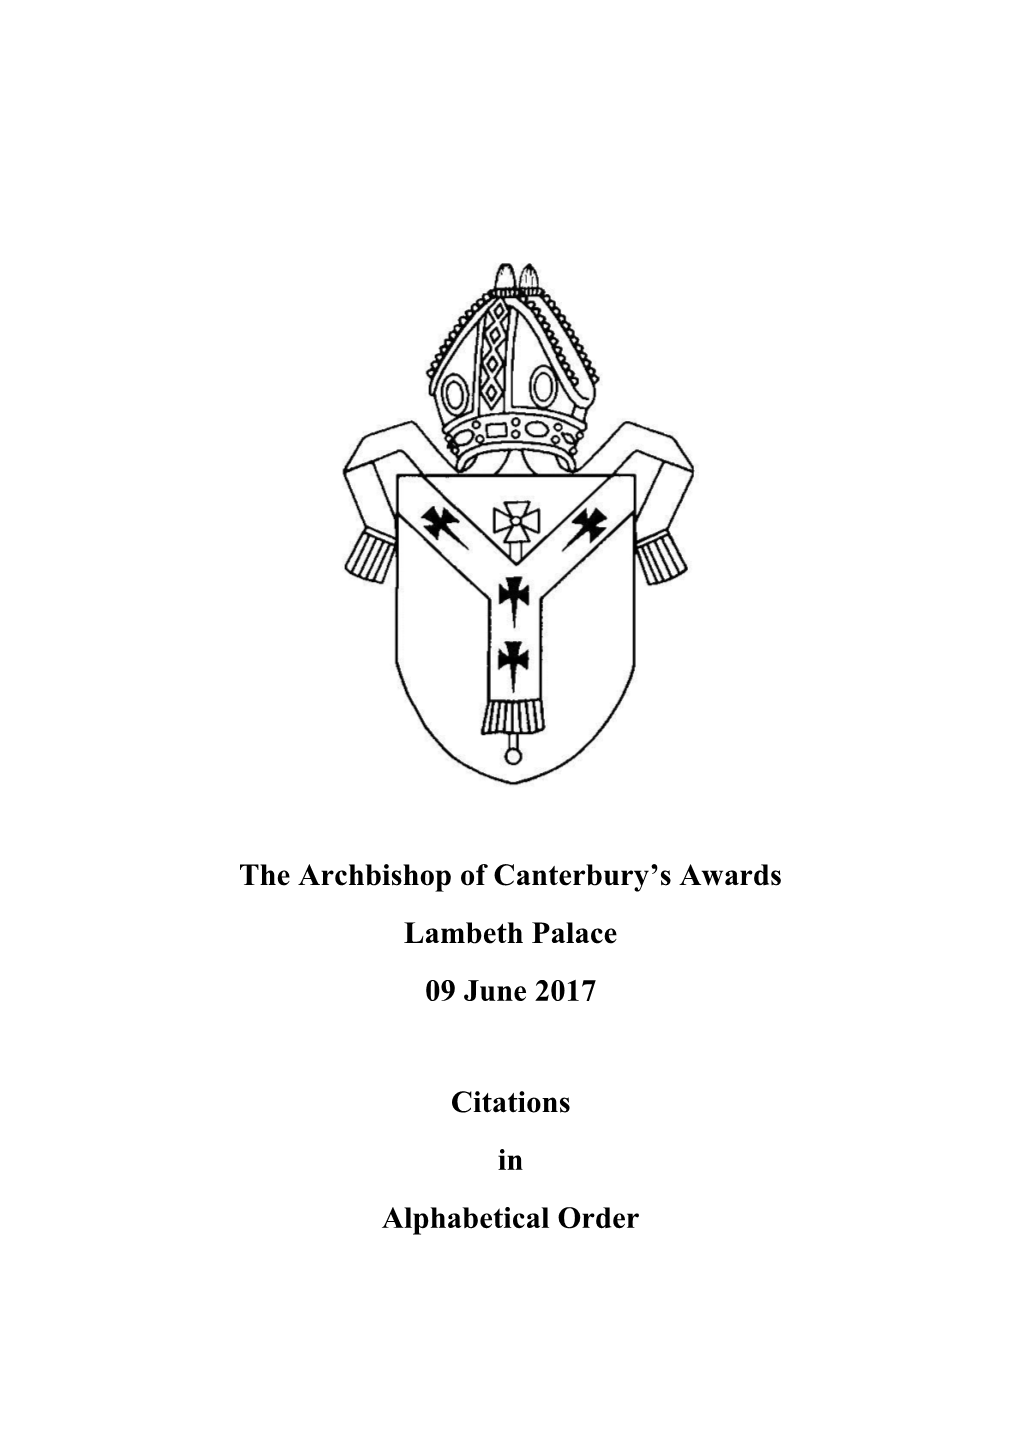 The Archbishop of Canterbury's Awards Lambeth Palace 09 June